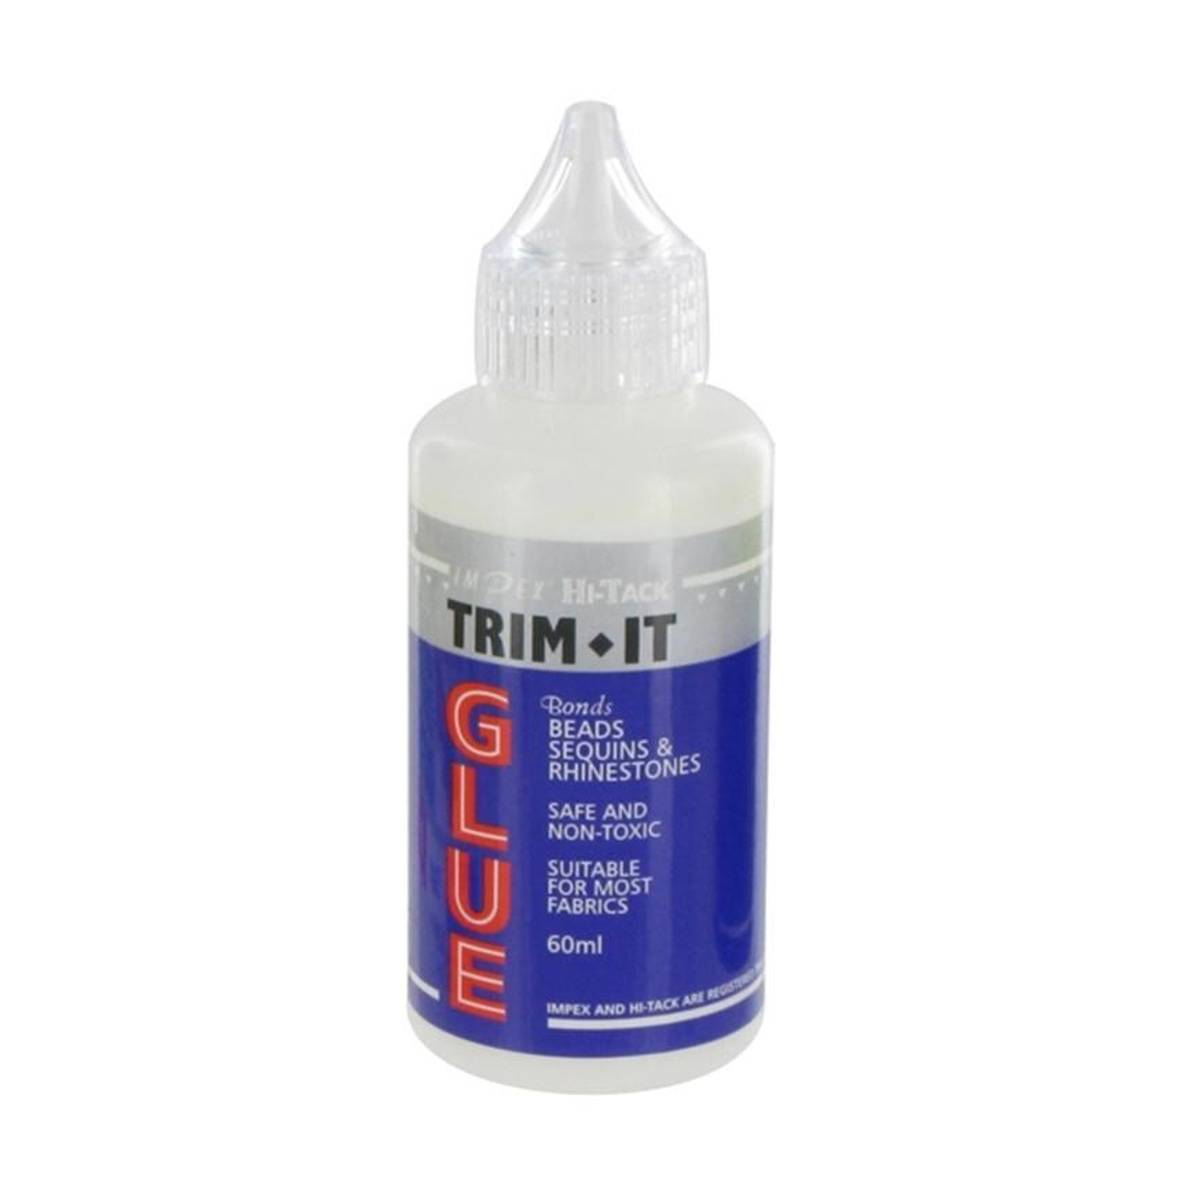 Impex HT1810 | Hi Tack PVA Craft & Hobby Glue/Adhesive | 115ml